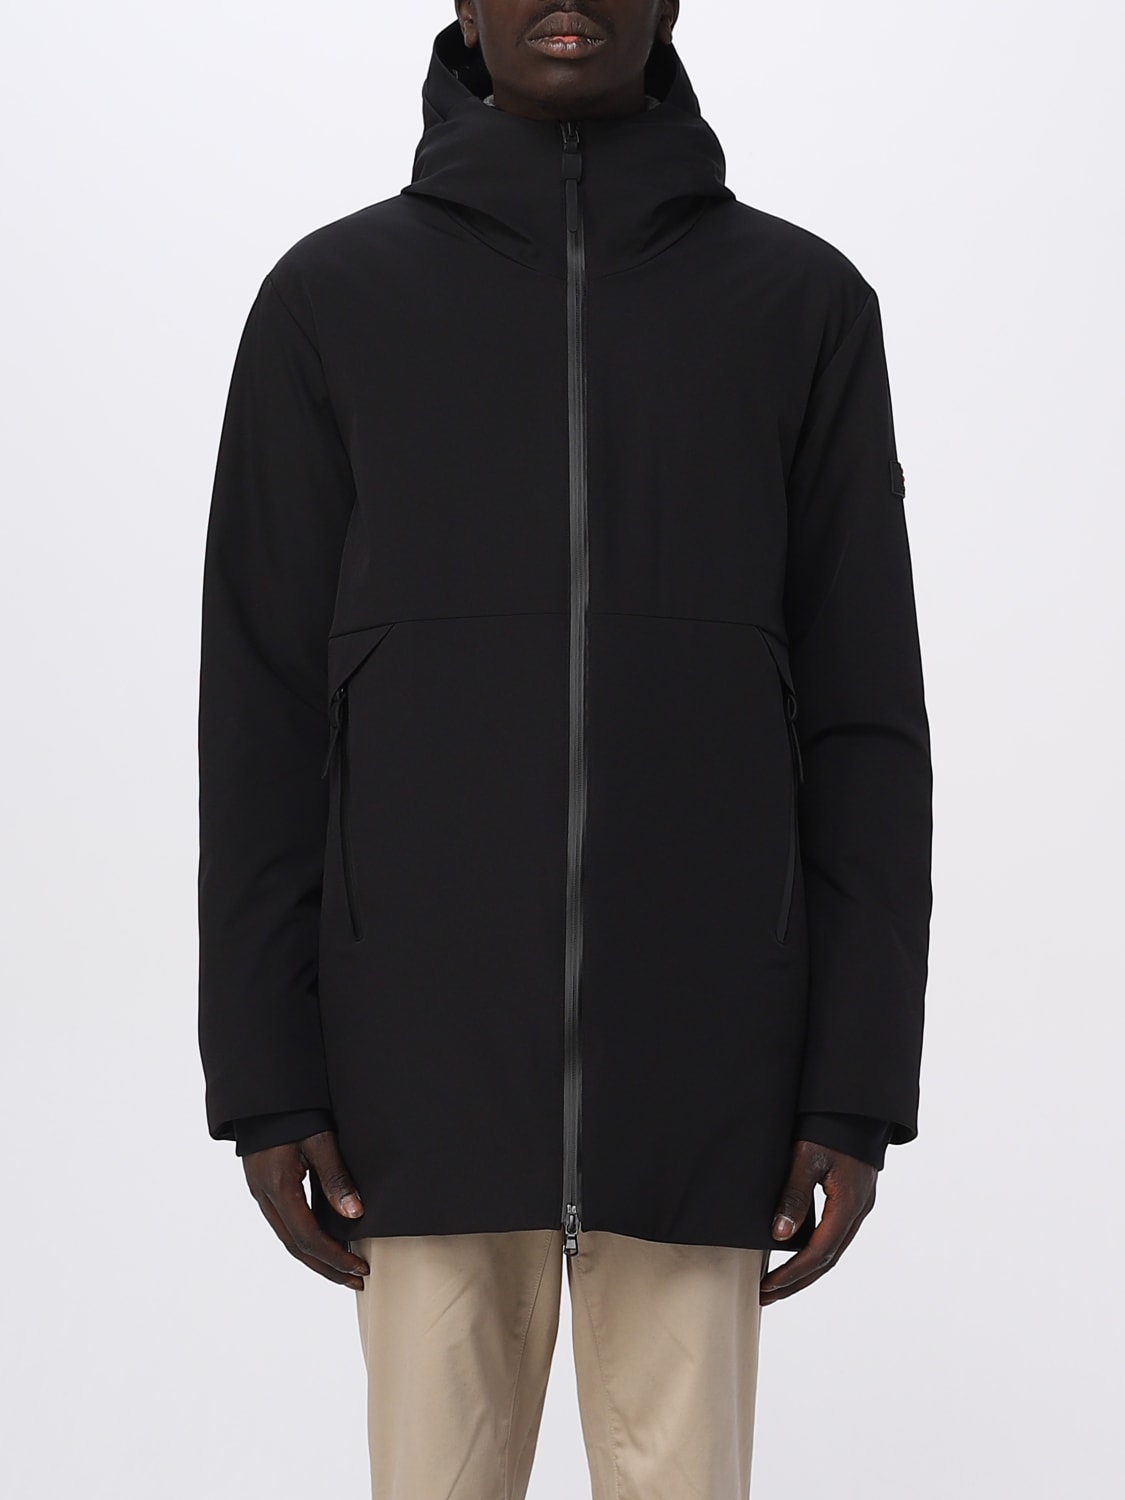 PEUTEREY: Jacket men - Black | PEUTEREY jacket PEU405901191581 online ...